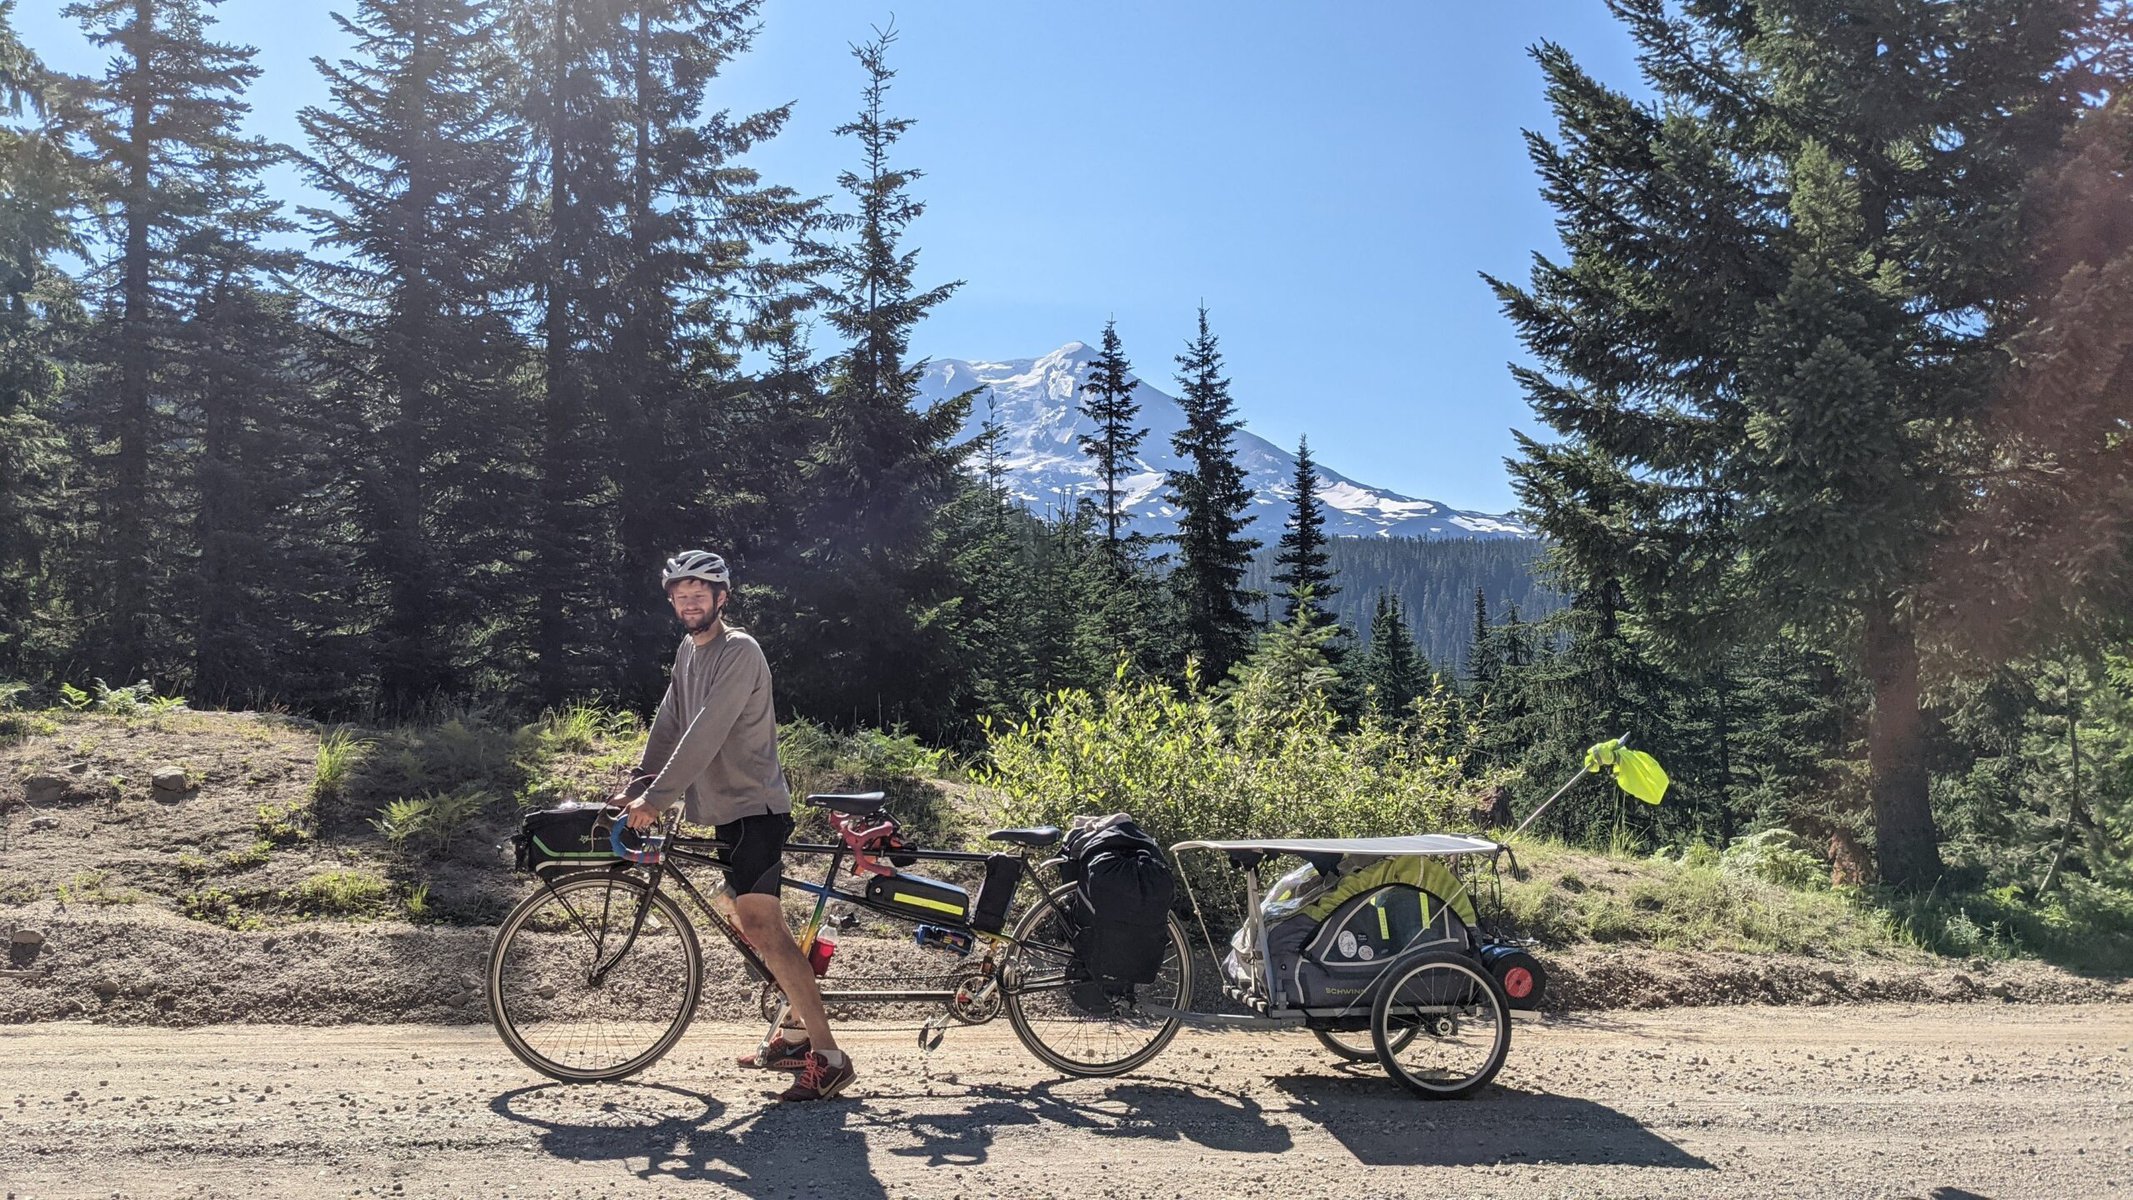 Will Stedden on a bike on a dirt road in Washington's High Cascades.